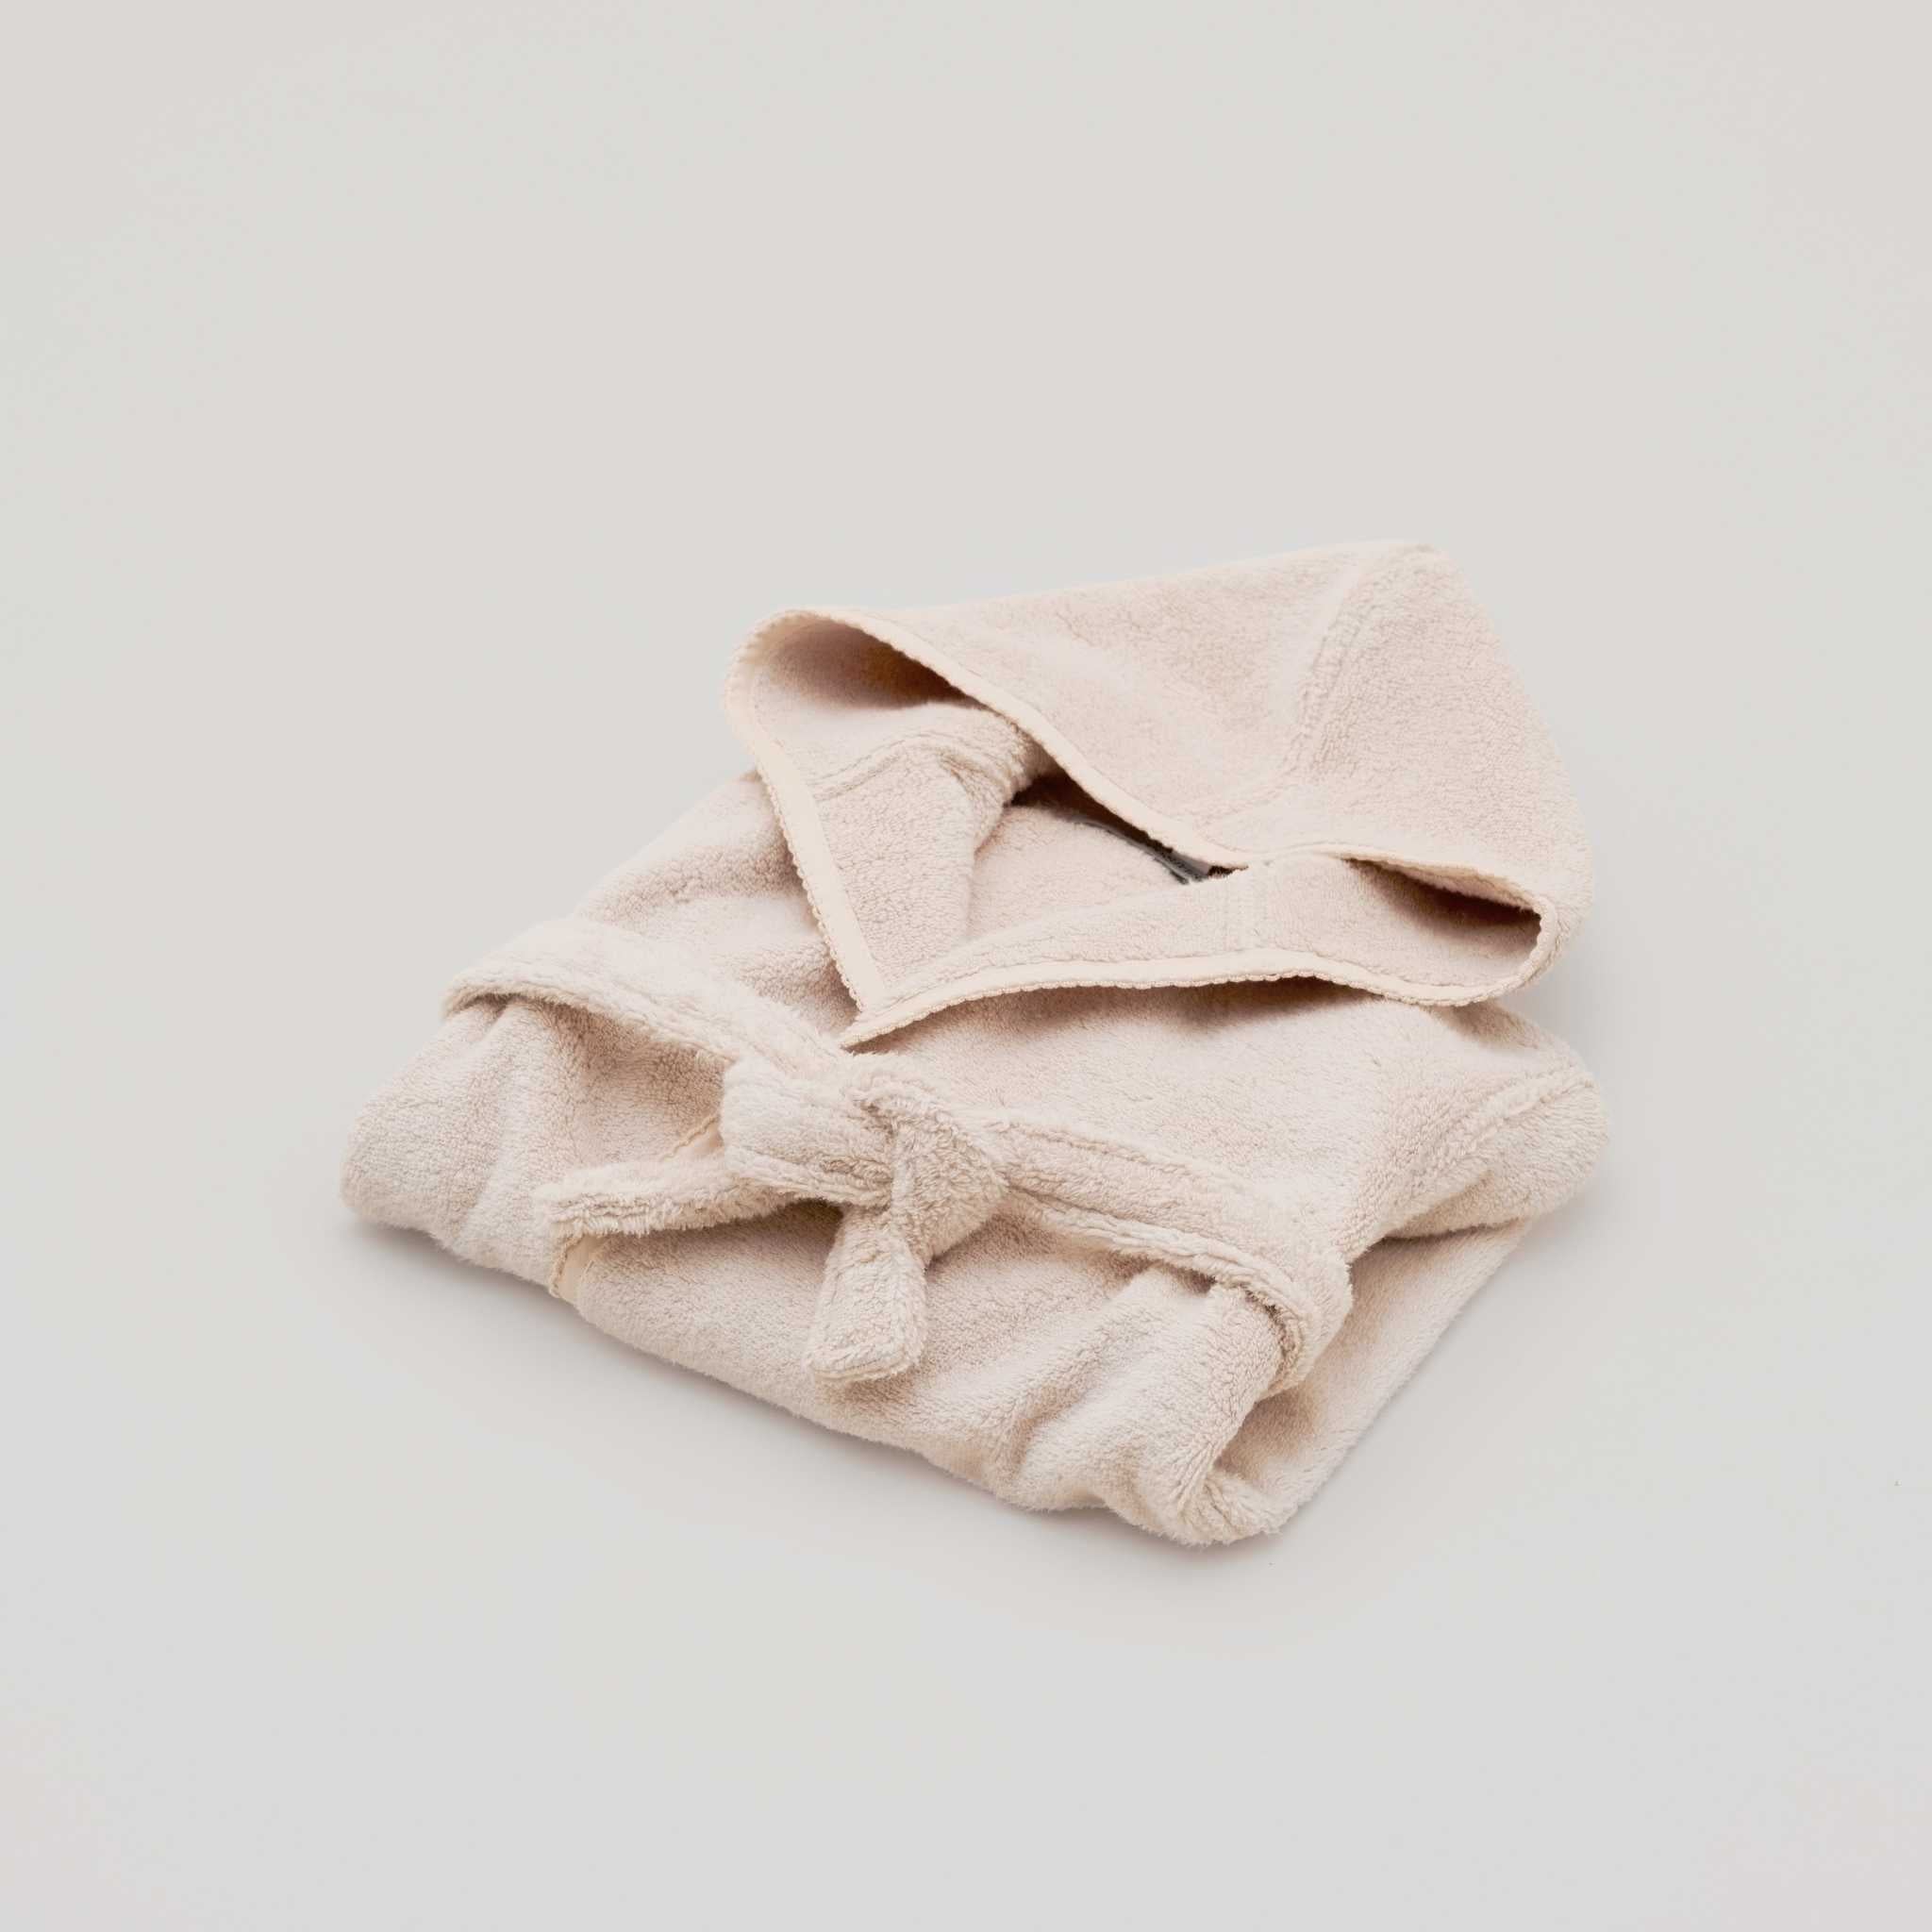 Garbo & Friends Bathrobe - Sand - Folded On Grey Background